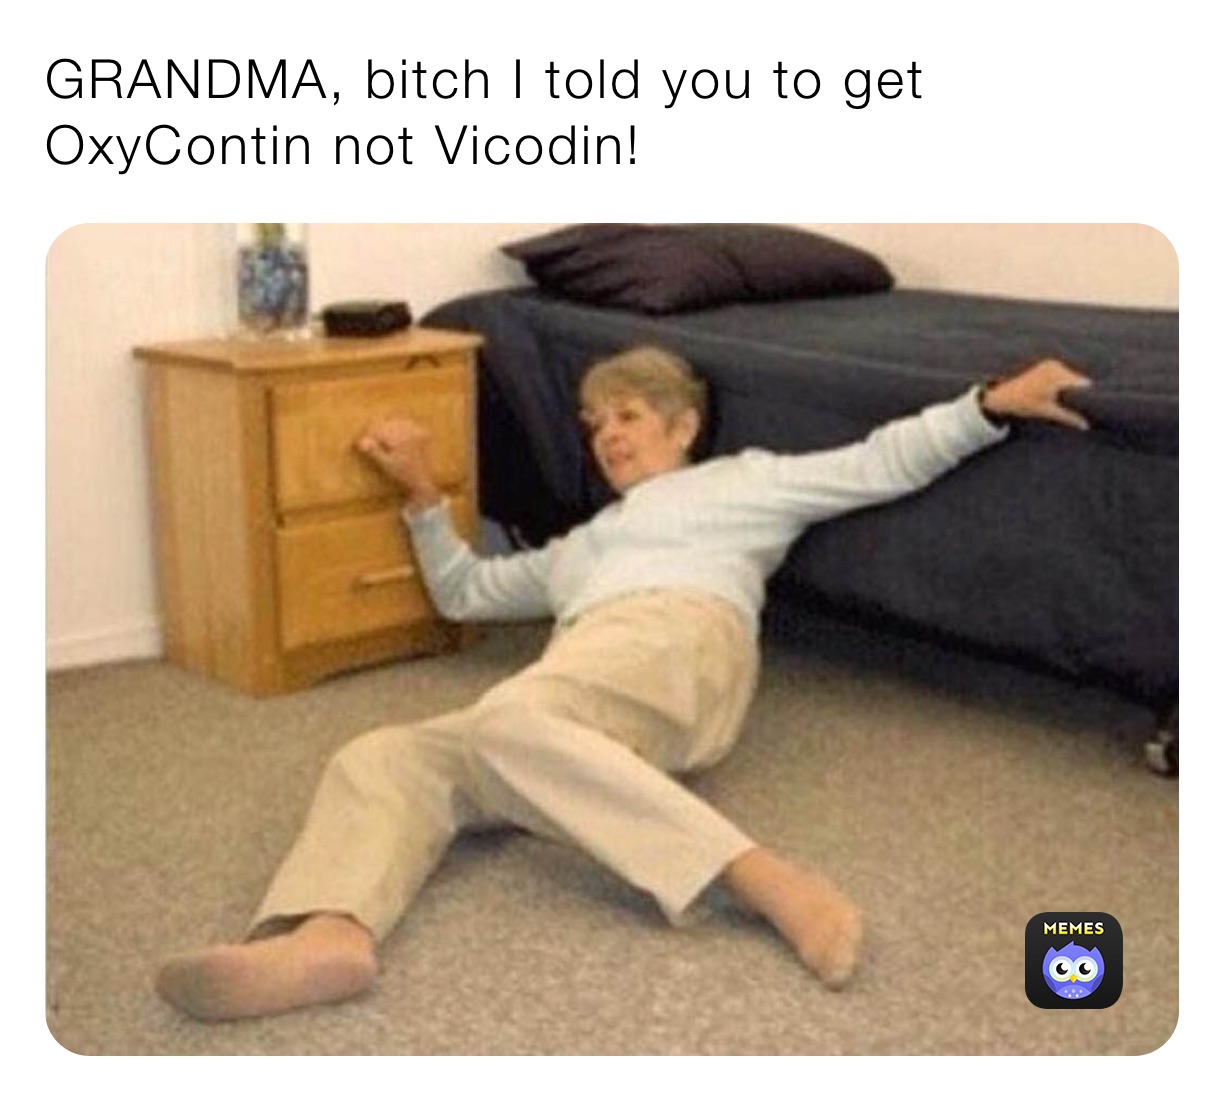 GRANDMA, bitch I told you to get OxyContin not Vicodin!